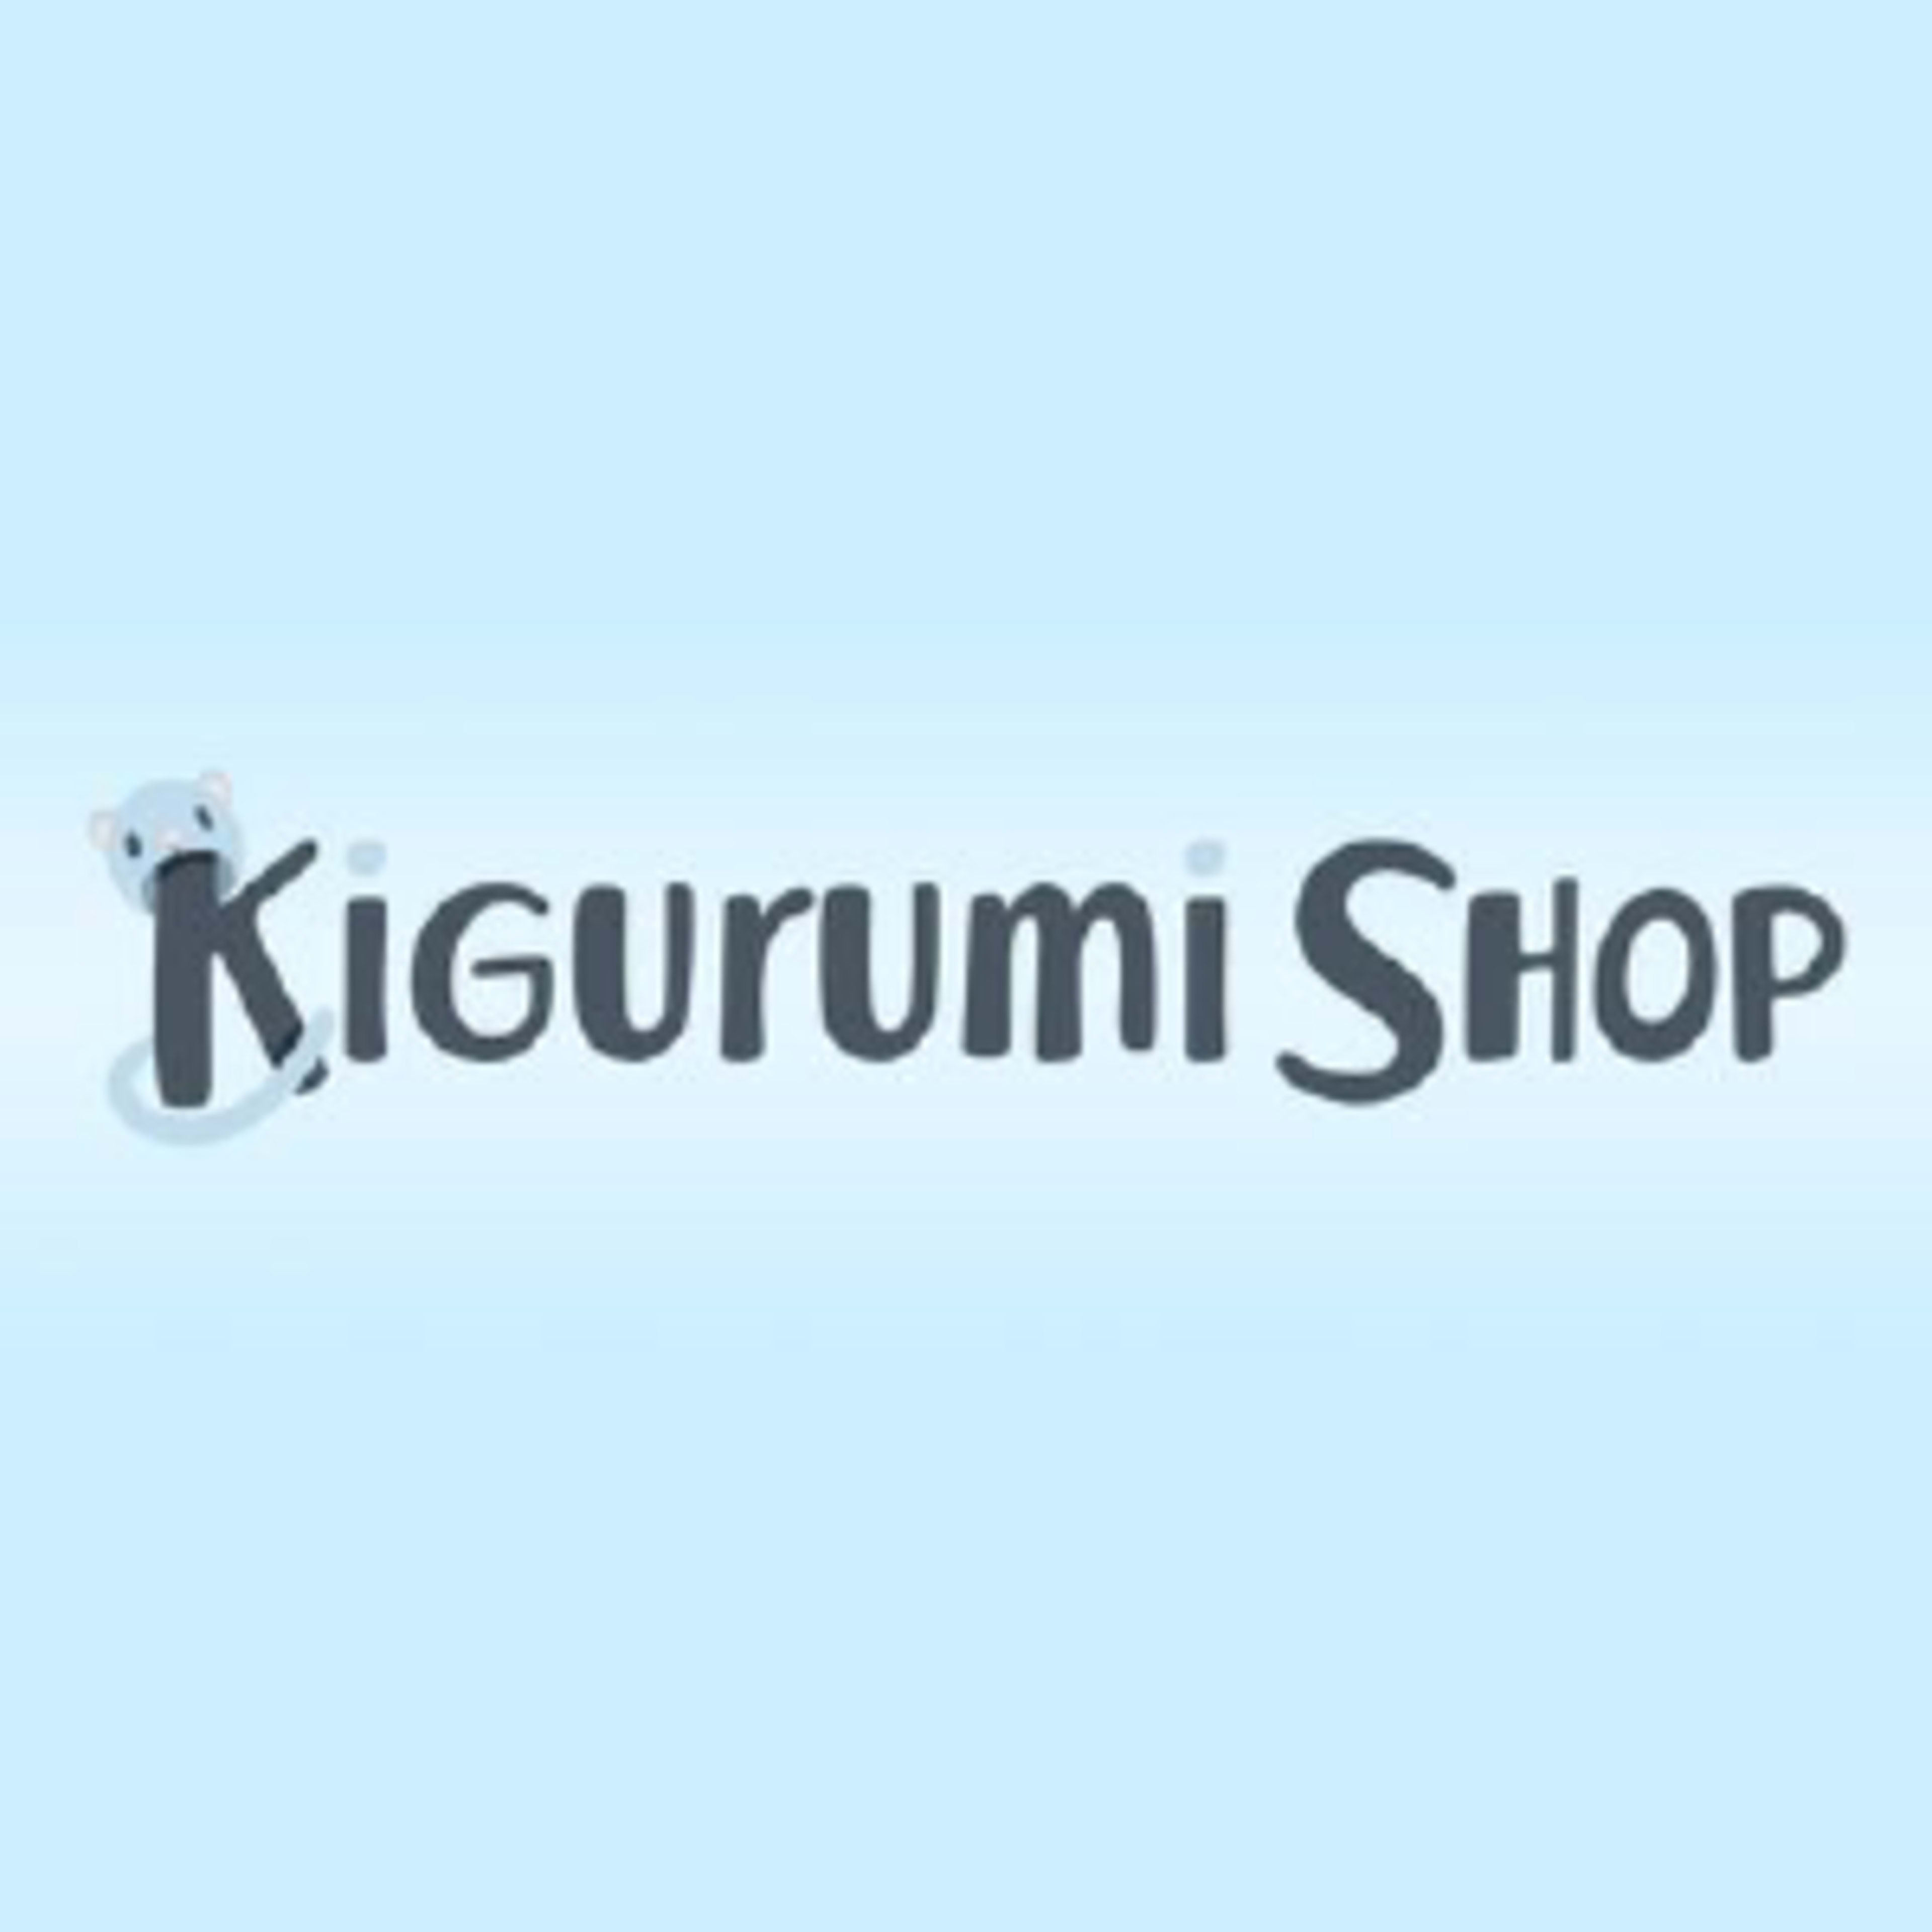 Kigurumi Shop Code